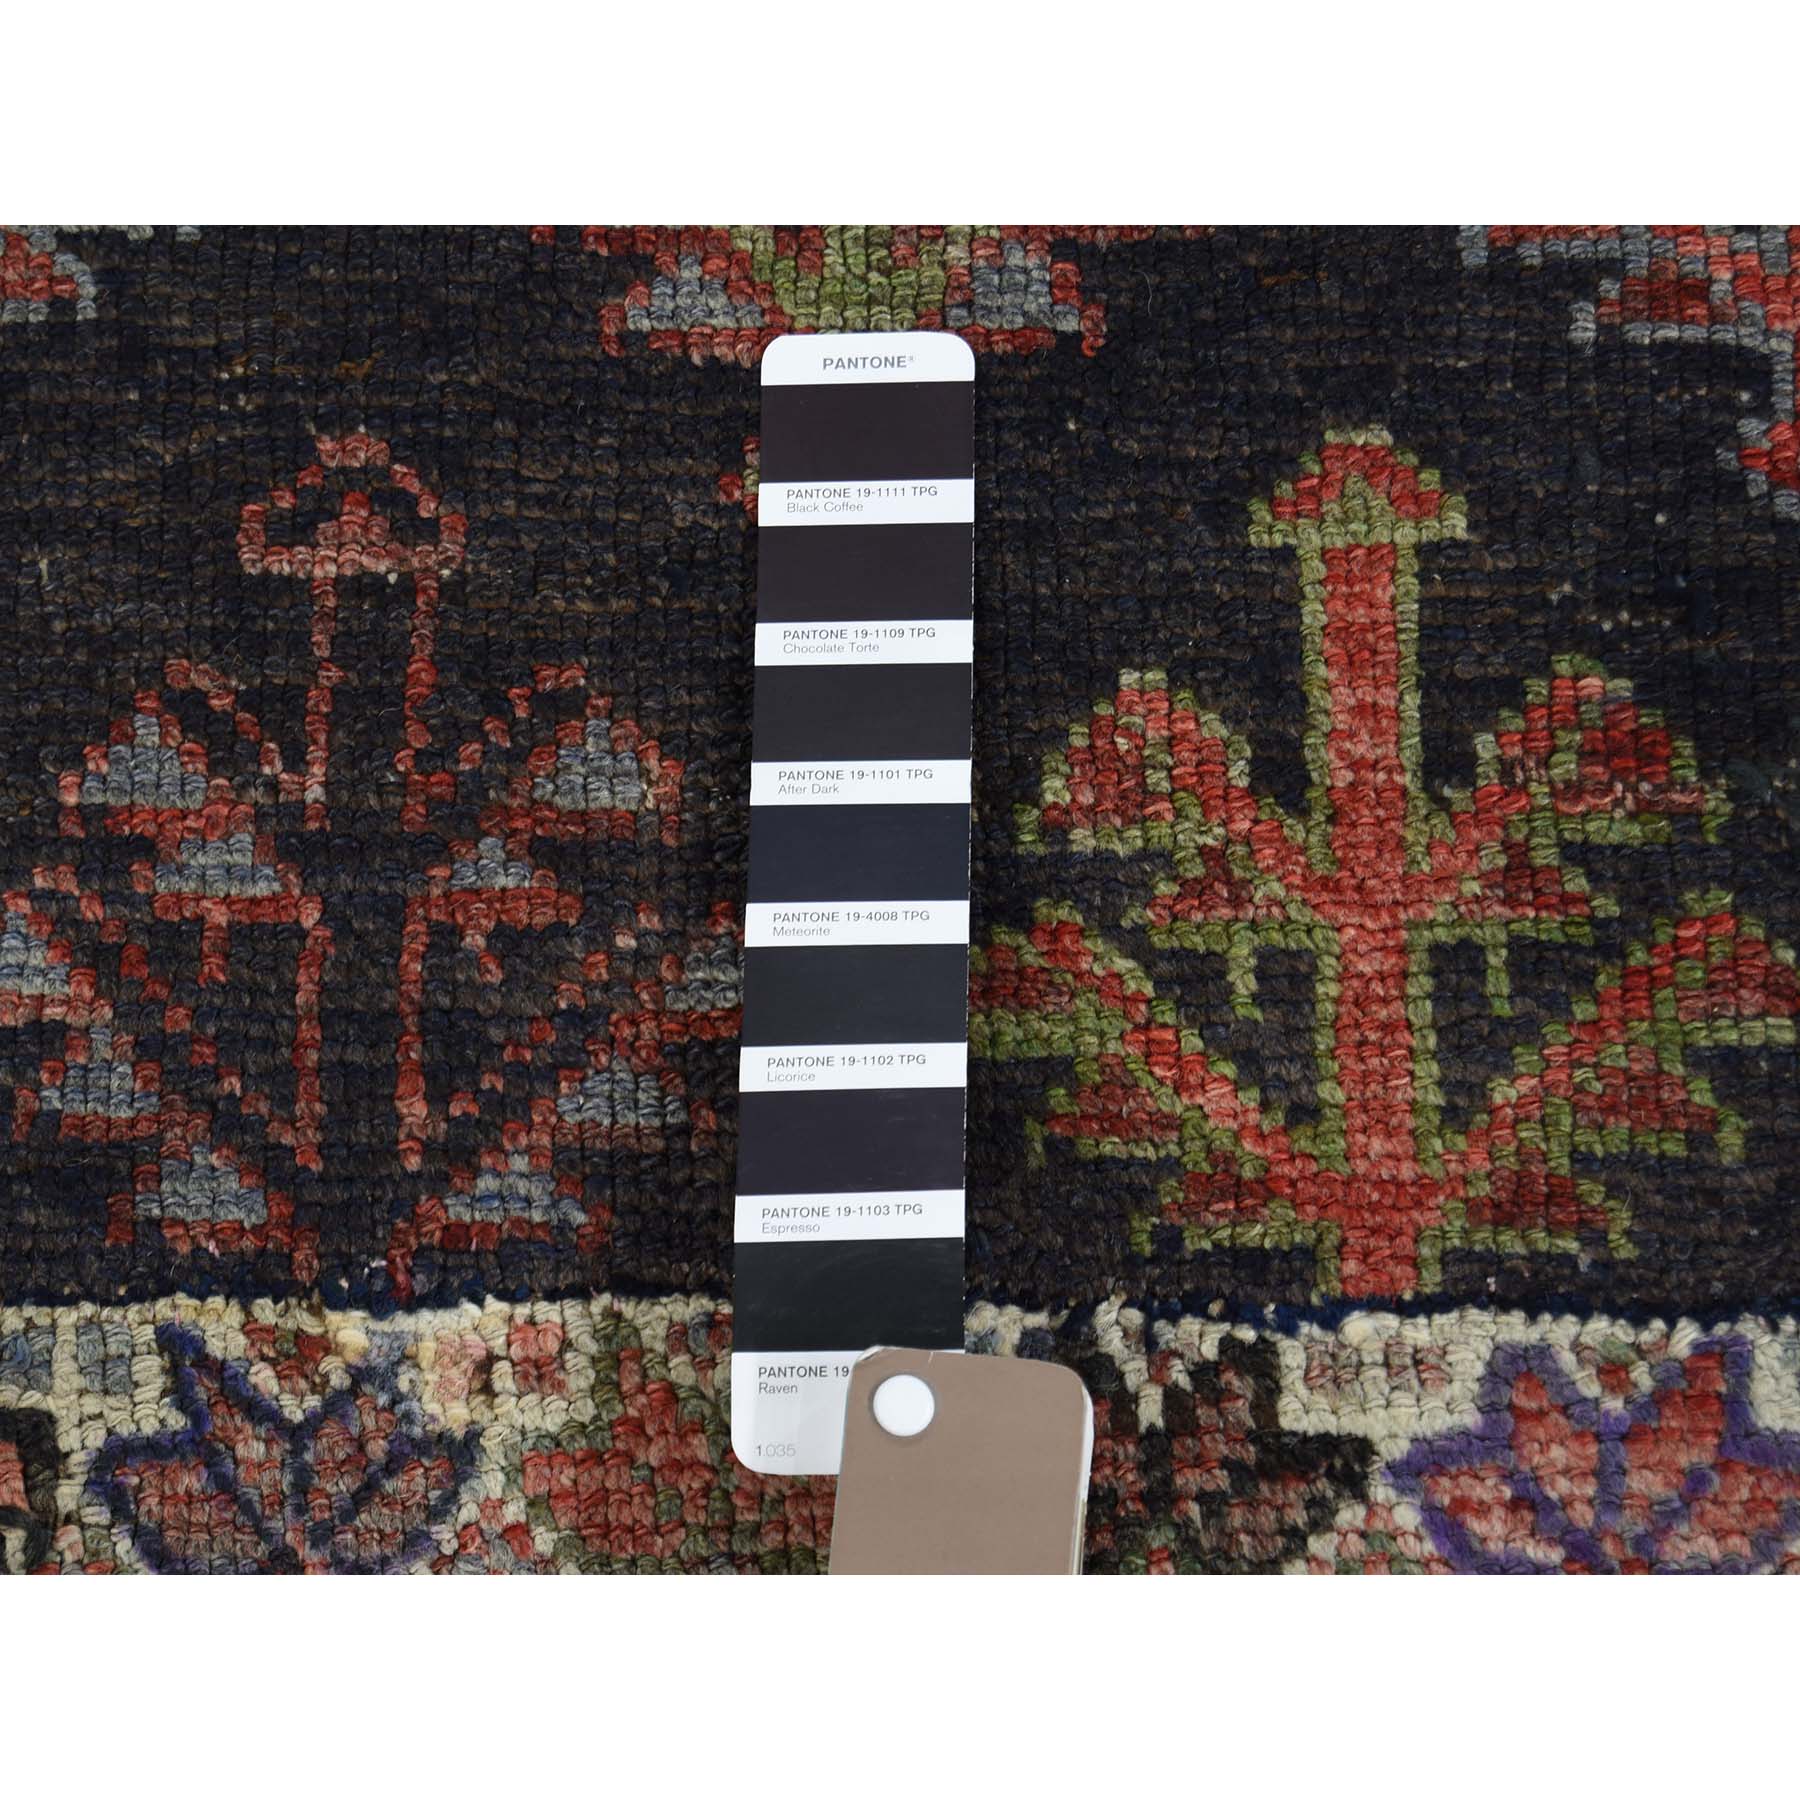 3-10 x8-5  Vintage Shiraz Exc Cond Pure Wool Handmade Runner Oriental 